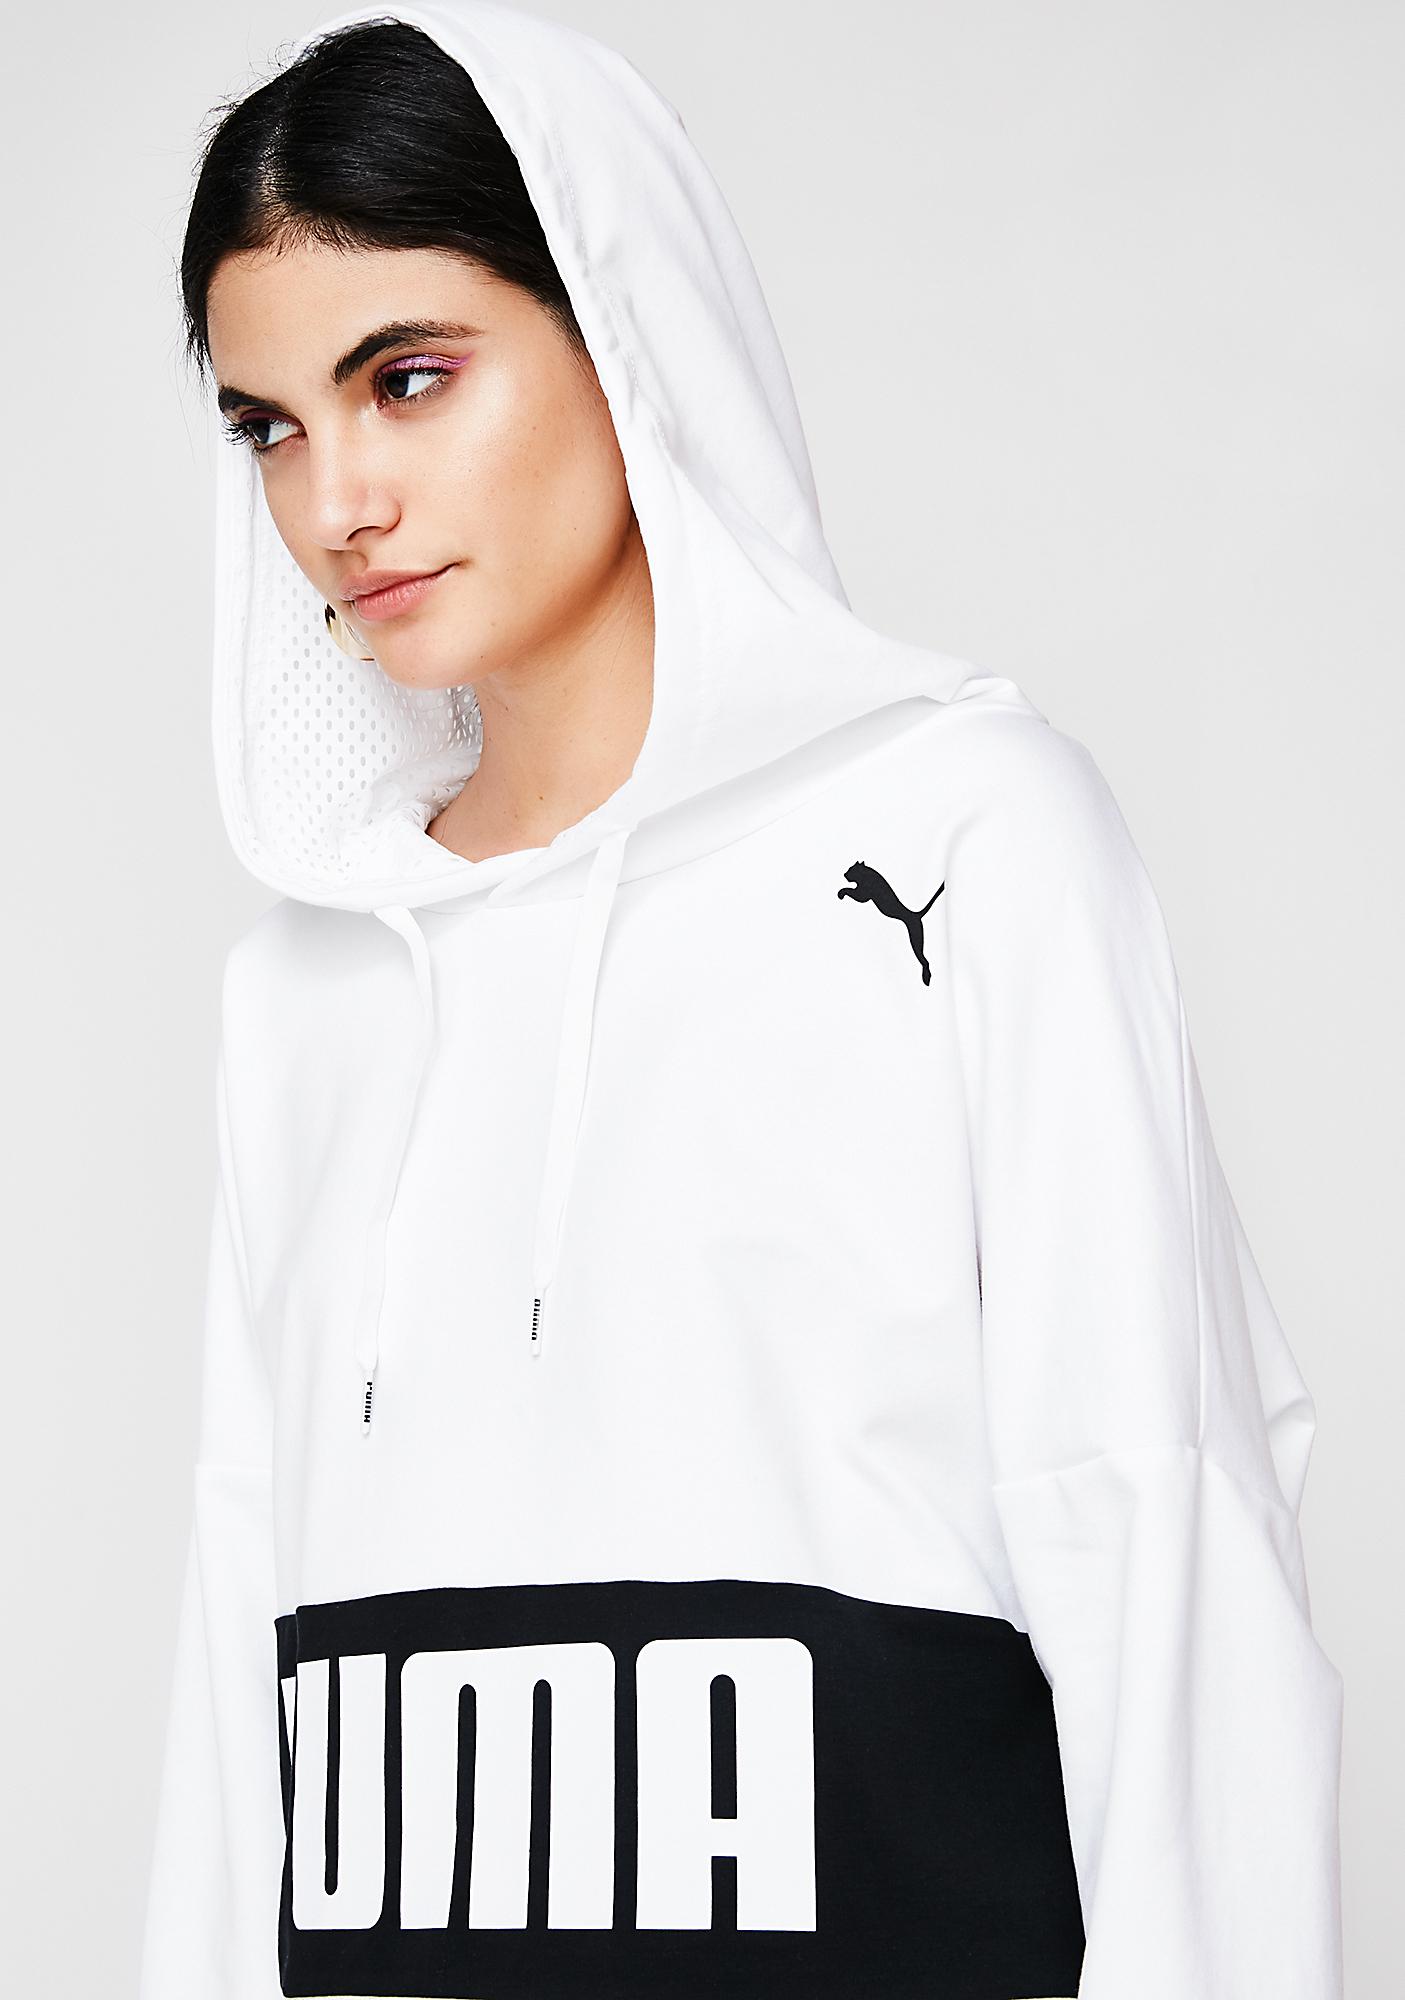 puma urban sports hoodie